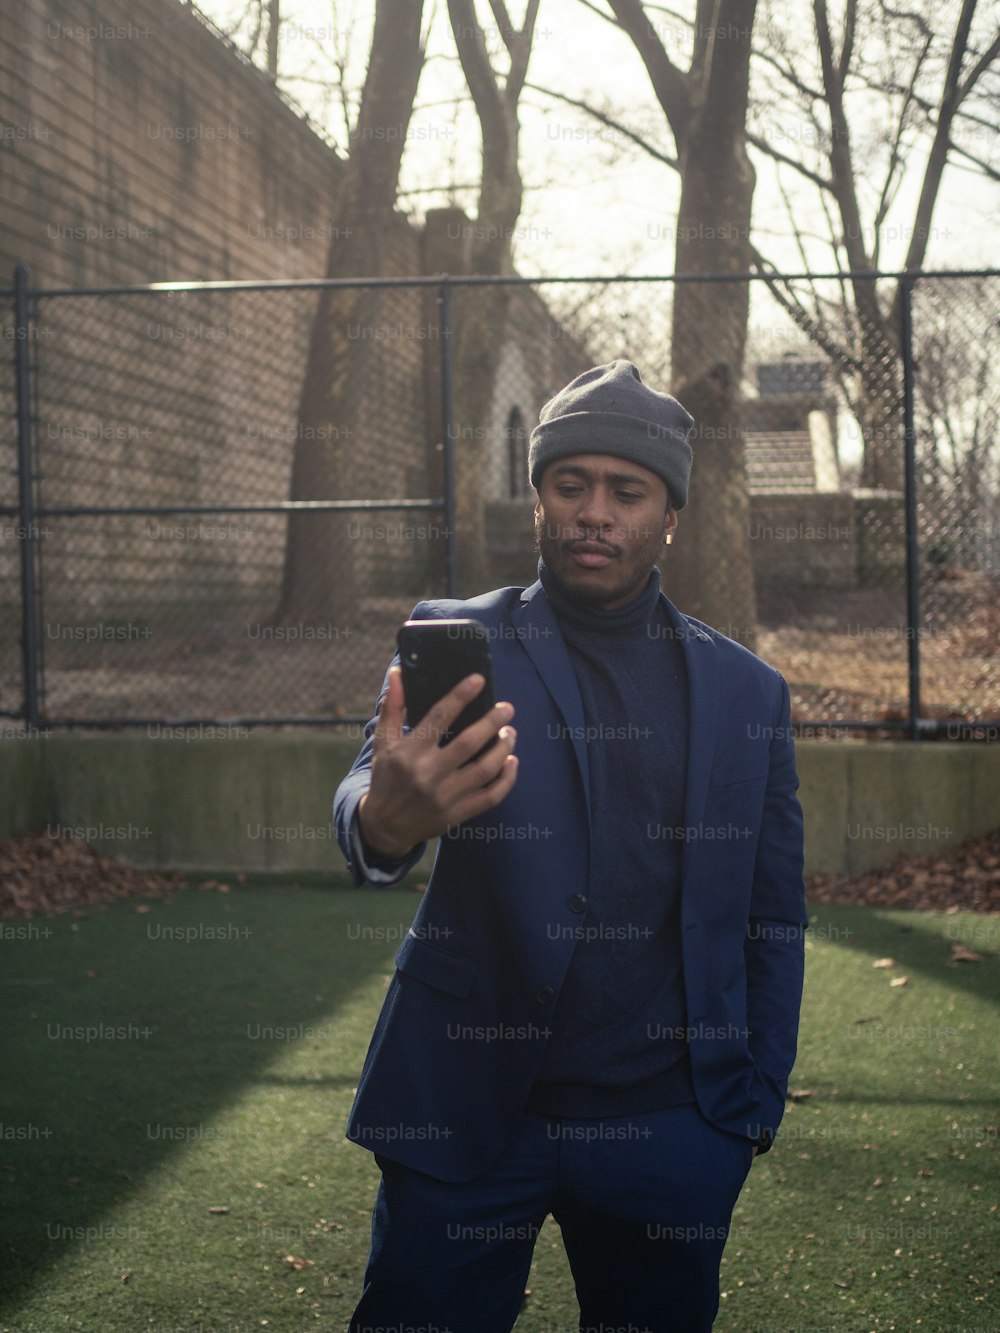 Un hombre con un traje azul sostiene un teléfono celular